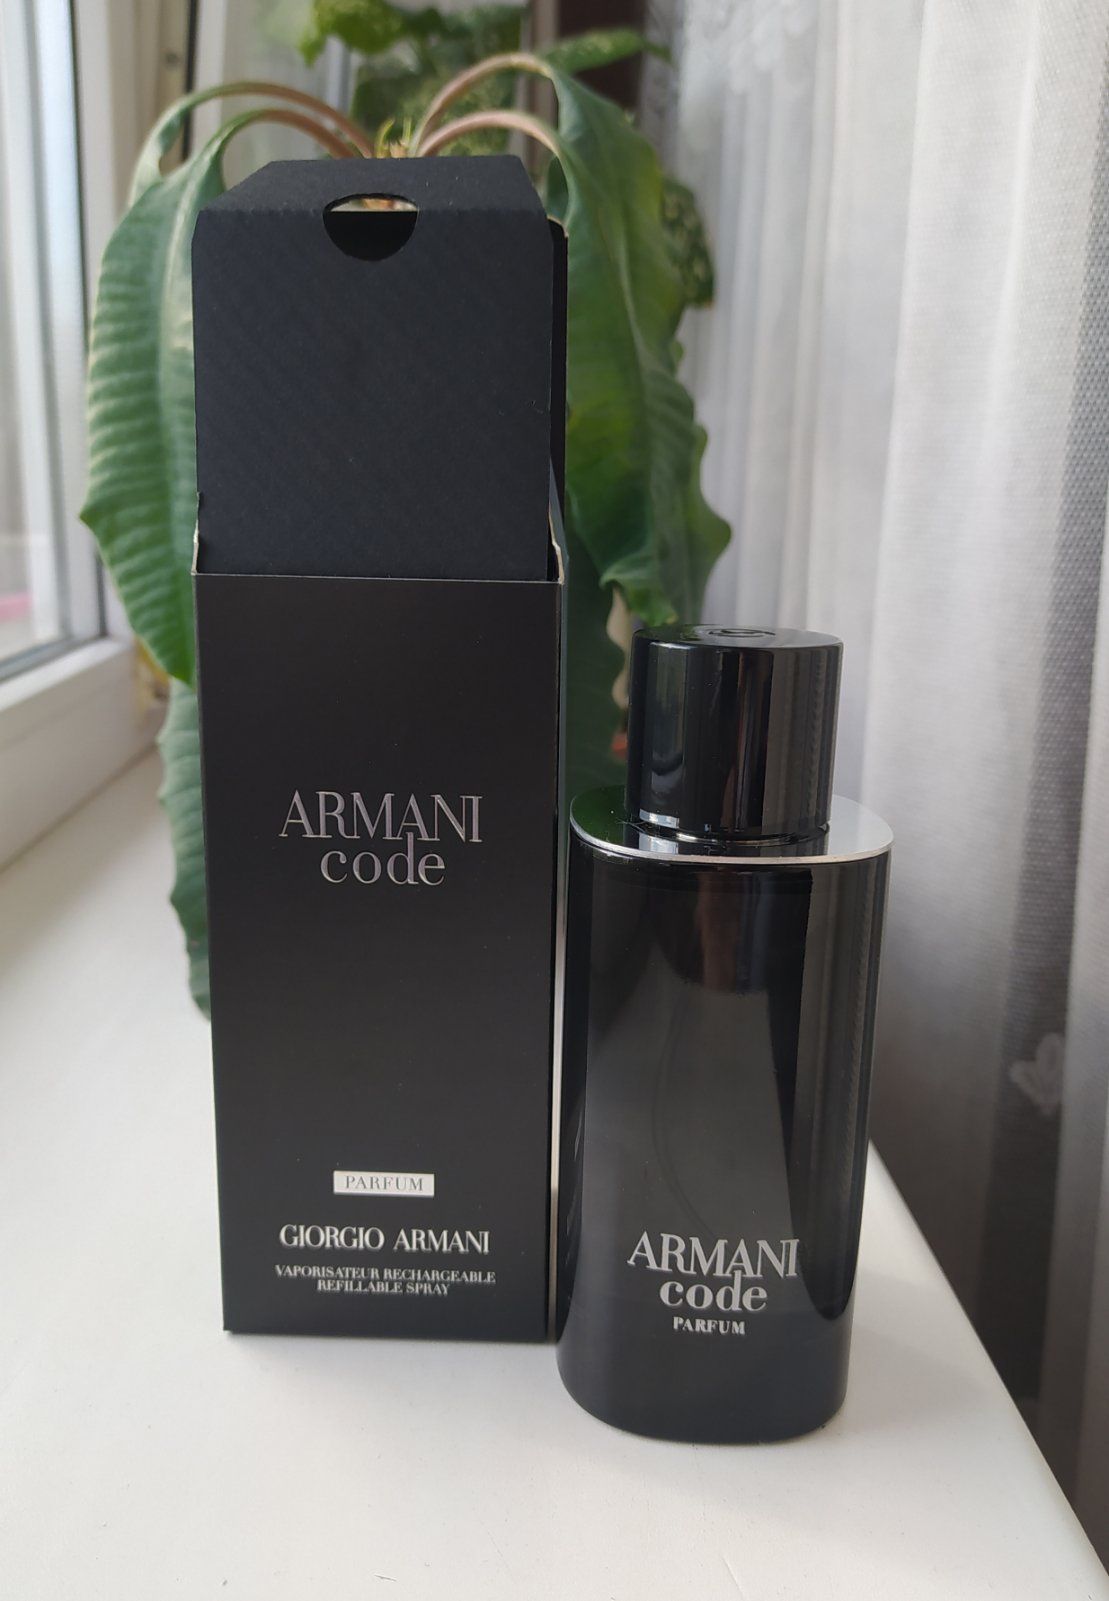 Парфюм мужской Giorgio Armani  Armani Code Parfum.125мл.